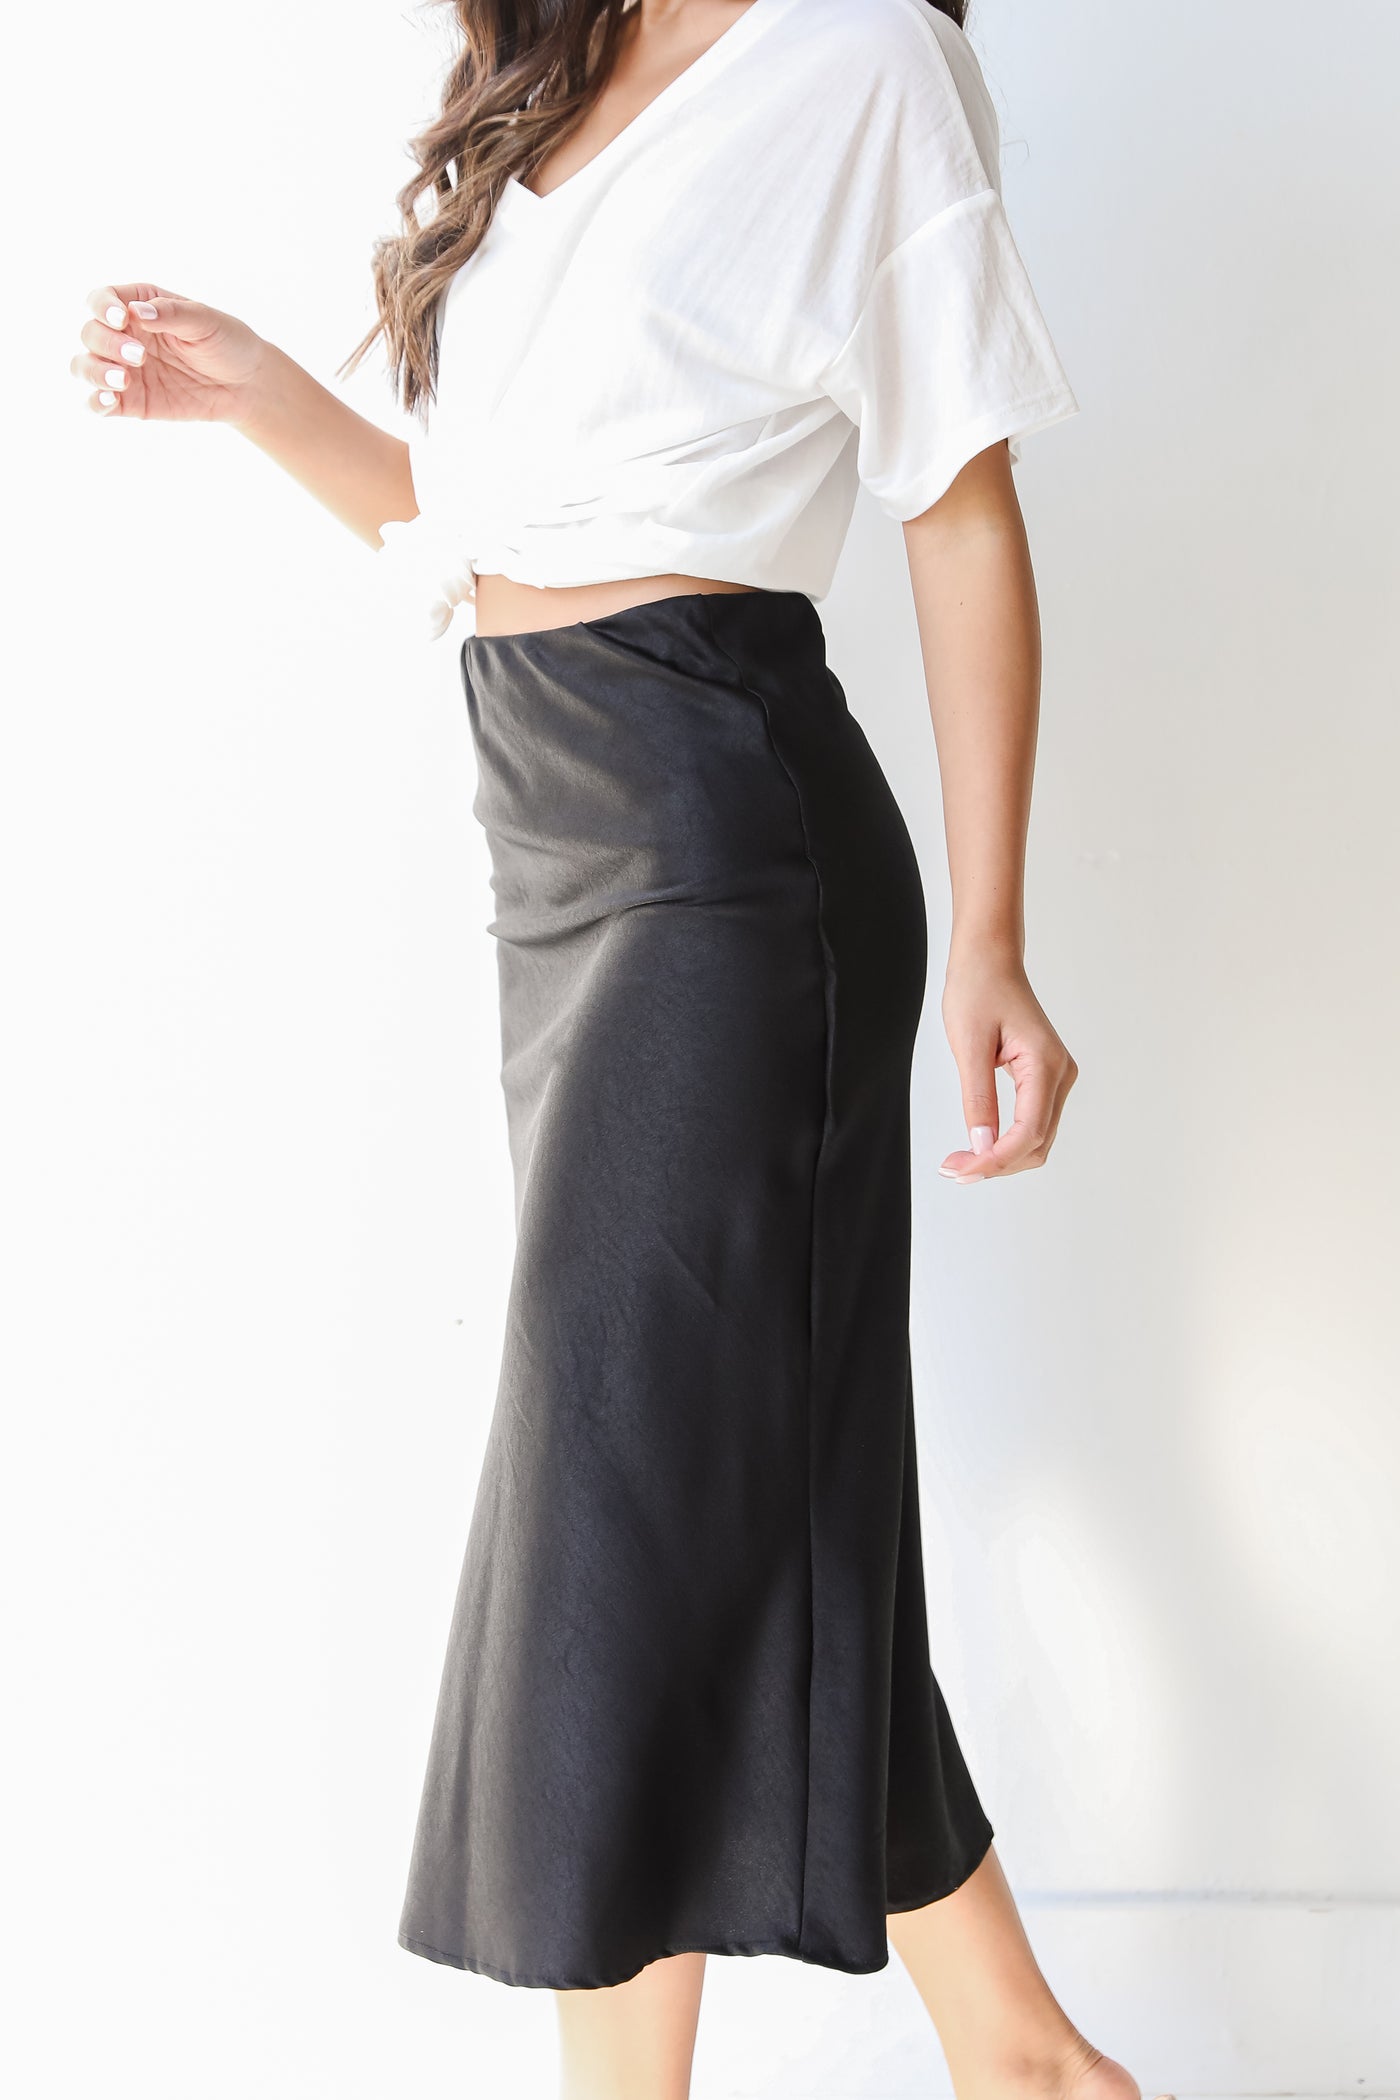 shiny black midi skirt side view